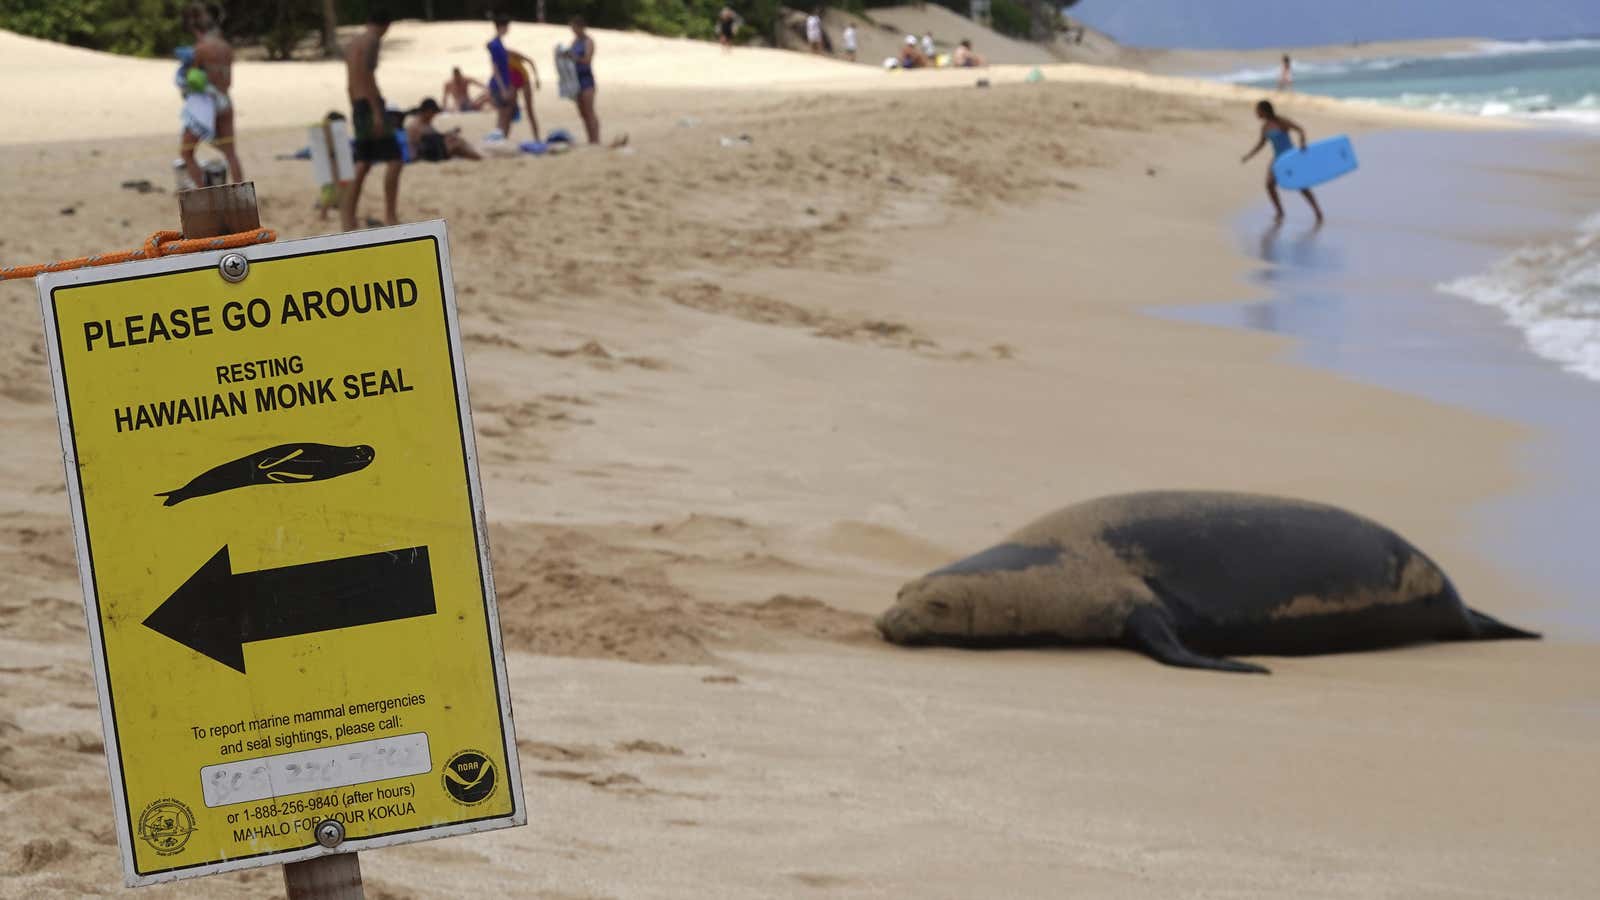 Hawaiian monk seals have been protected since 1976.